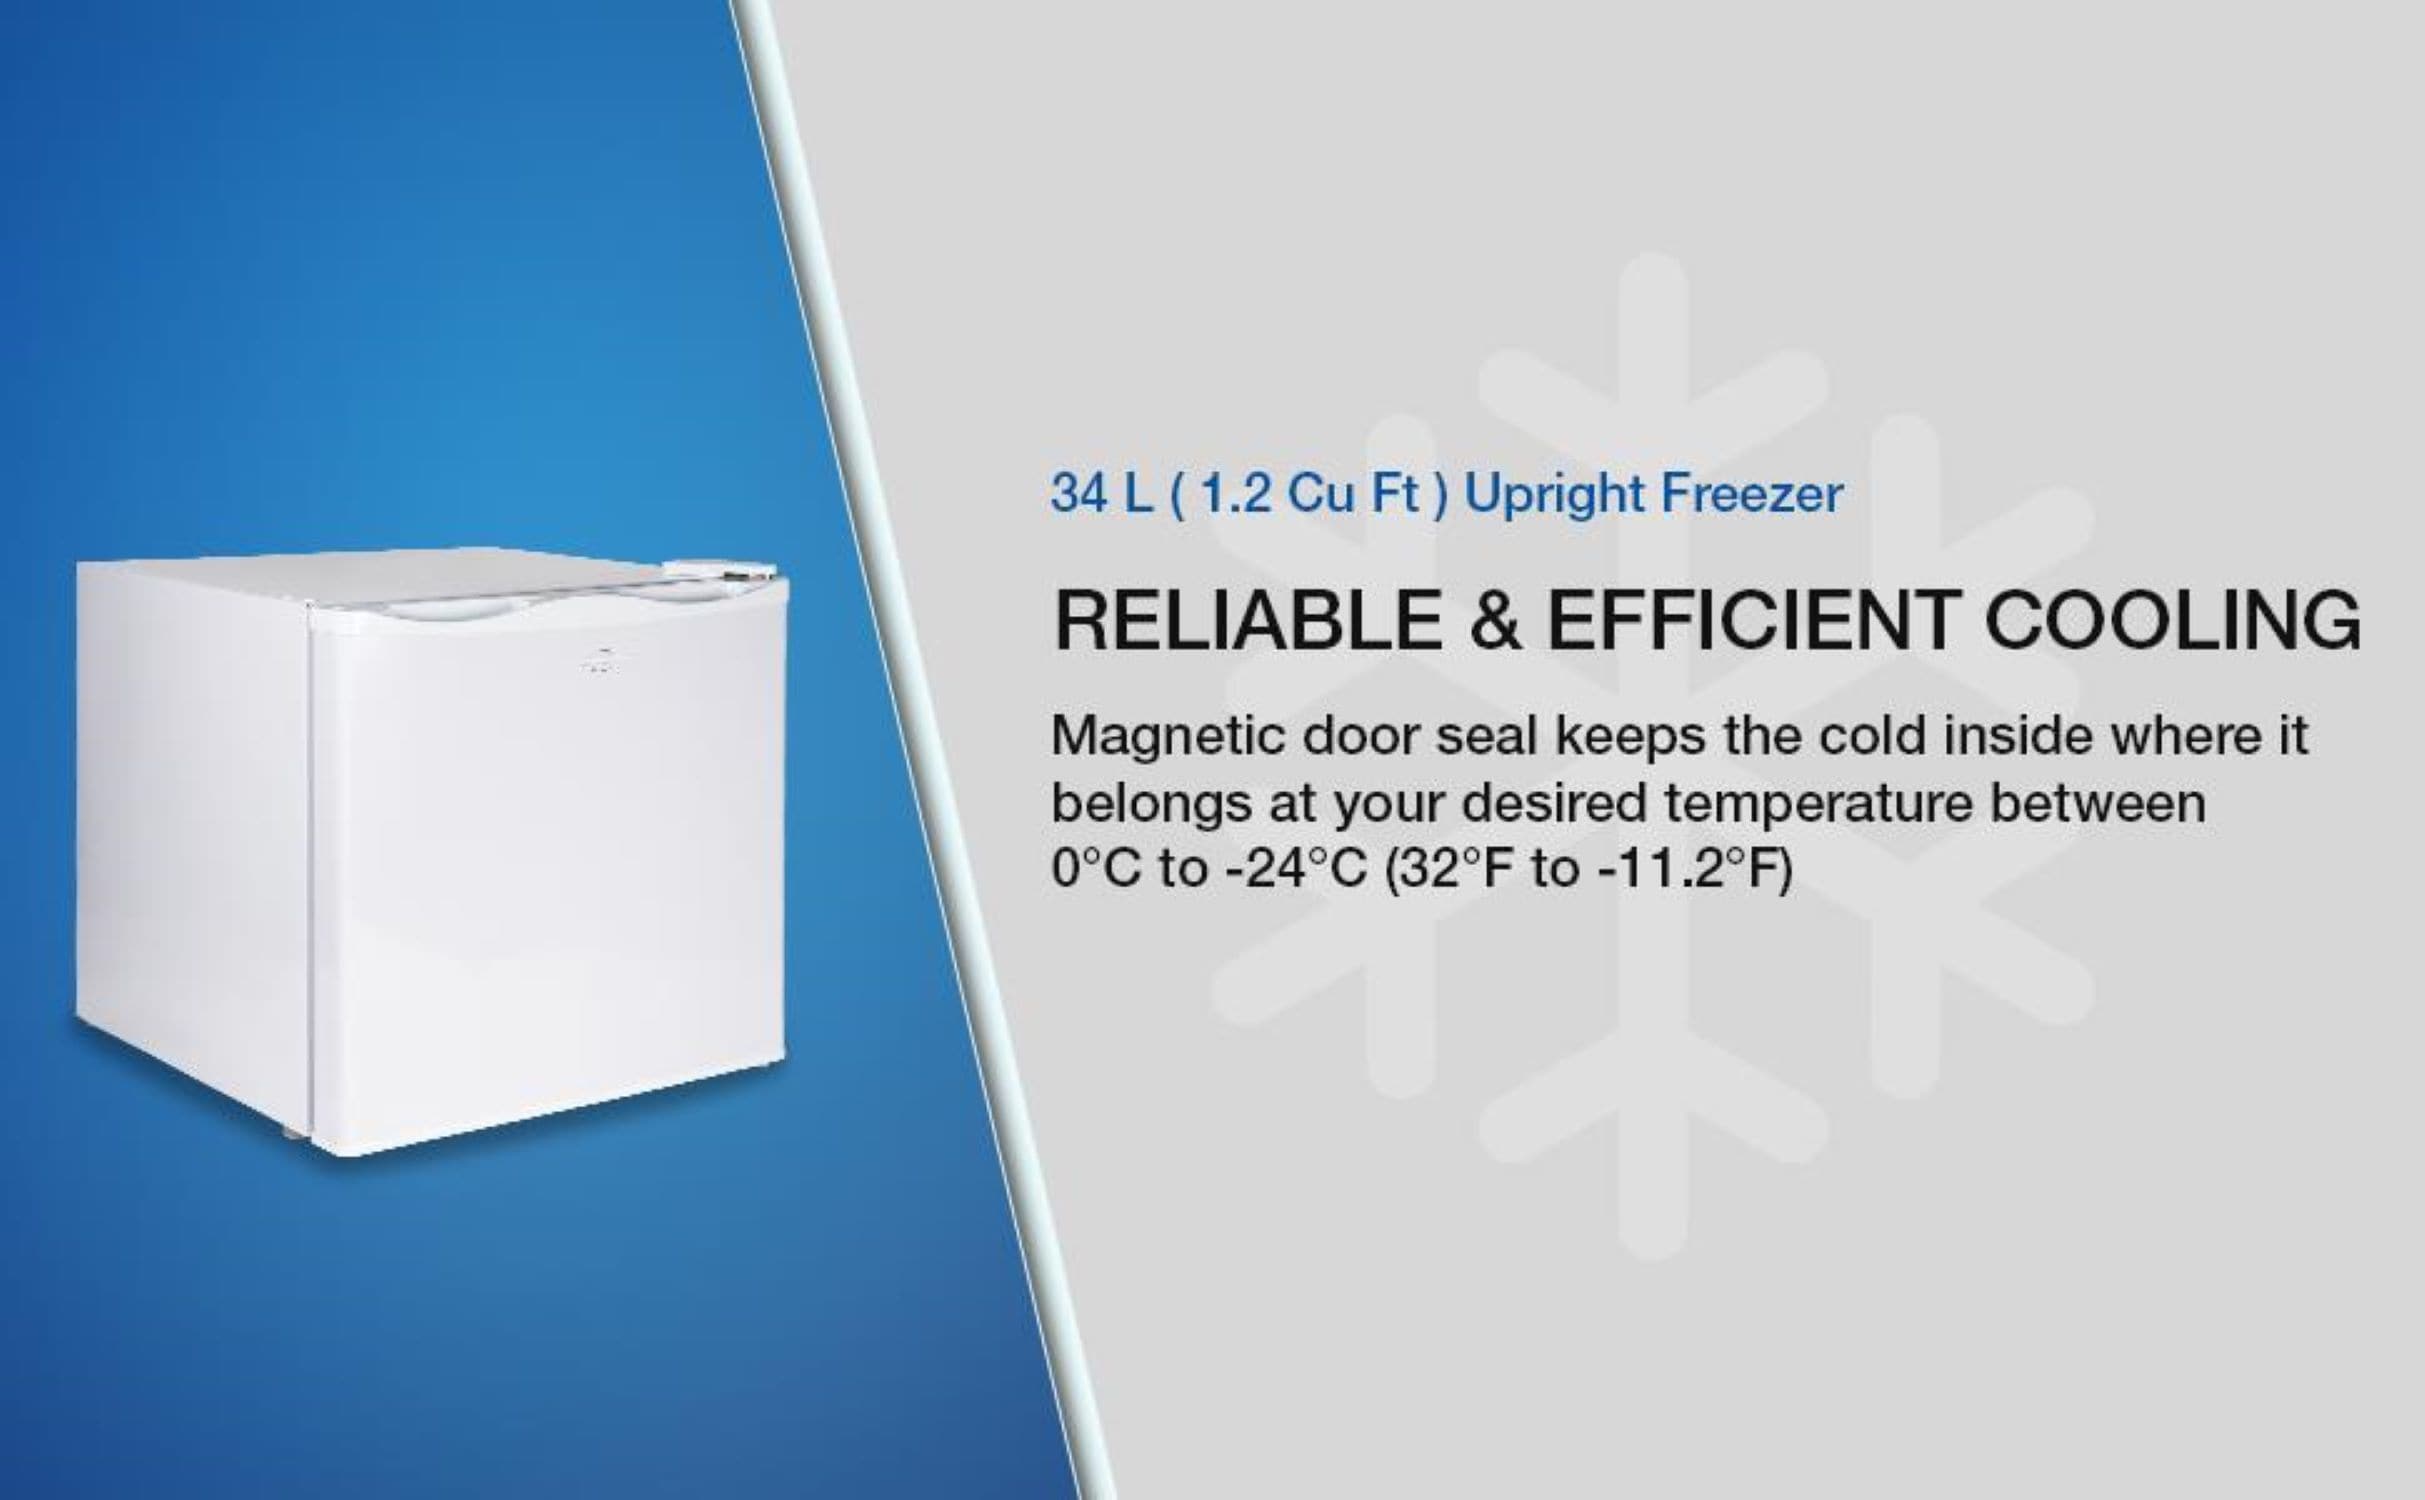 Koolatron 1.2 Cu ft Compact Upright Freezer, White